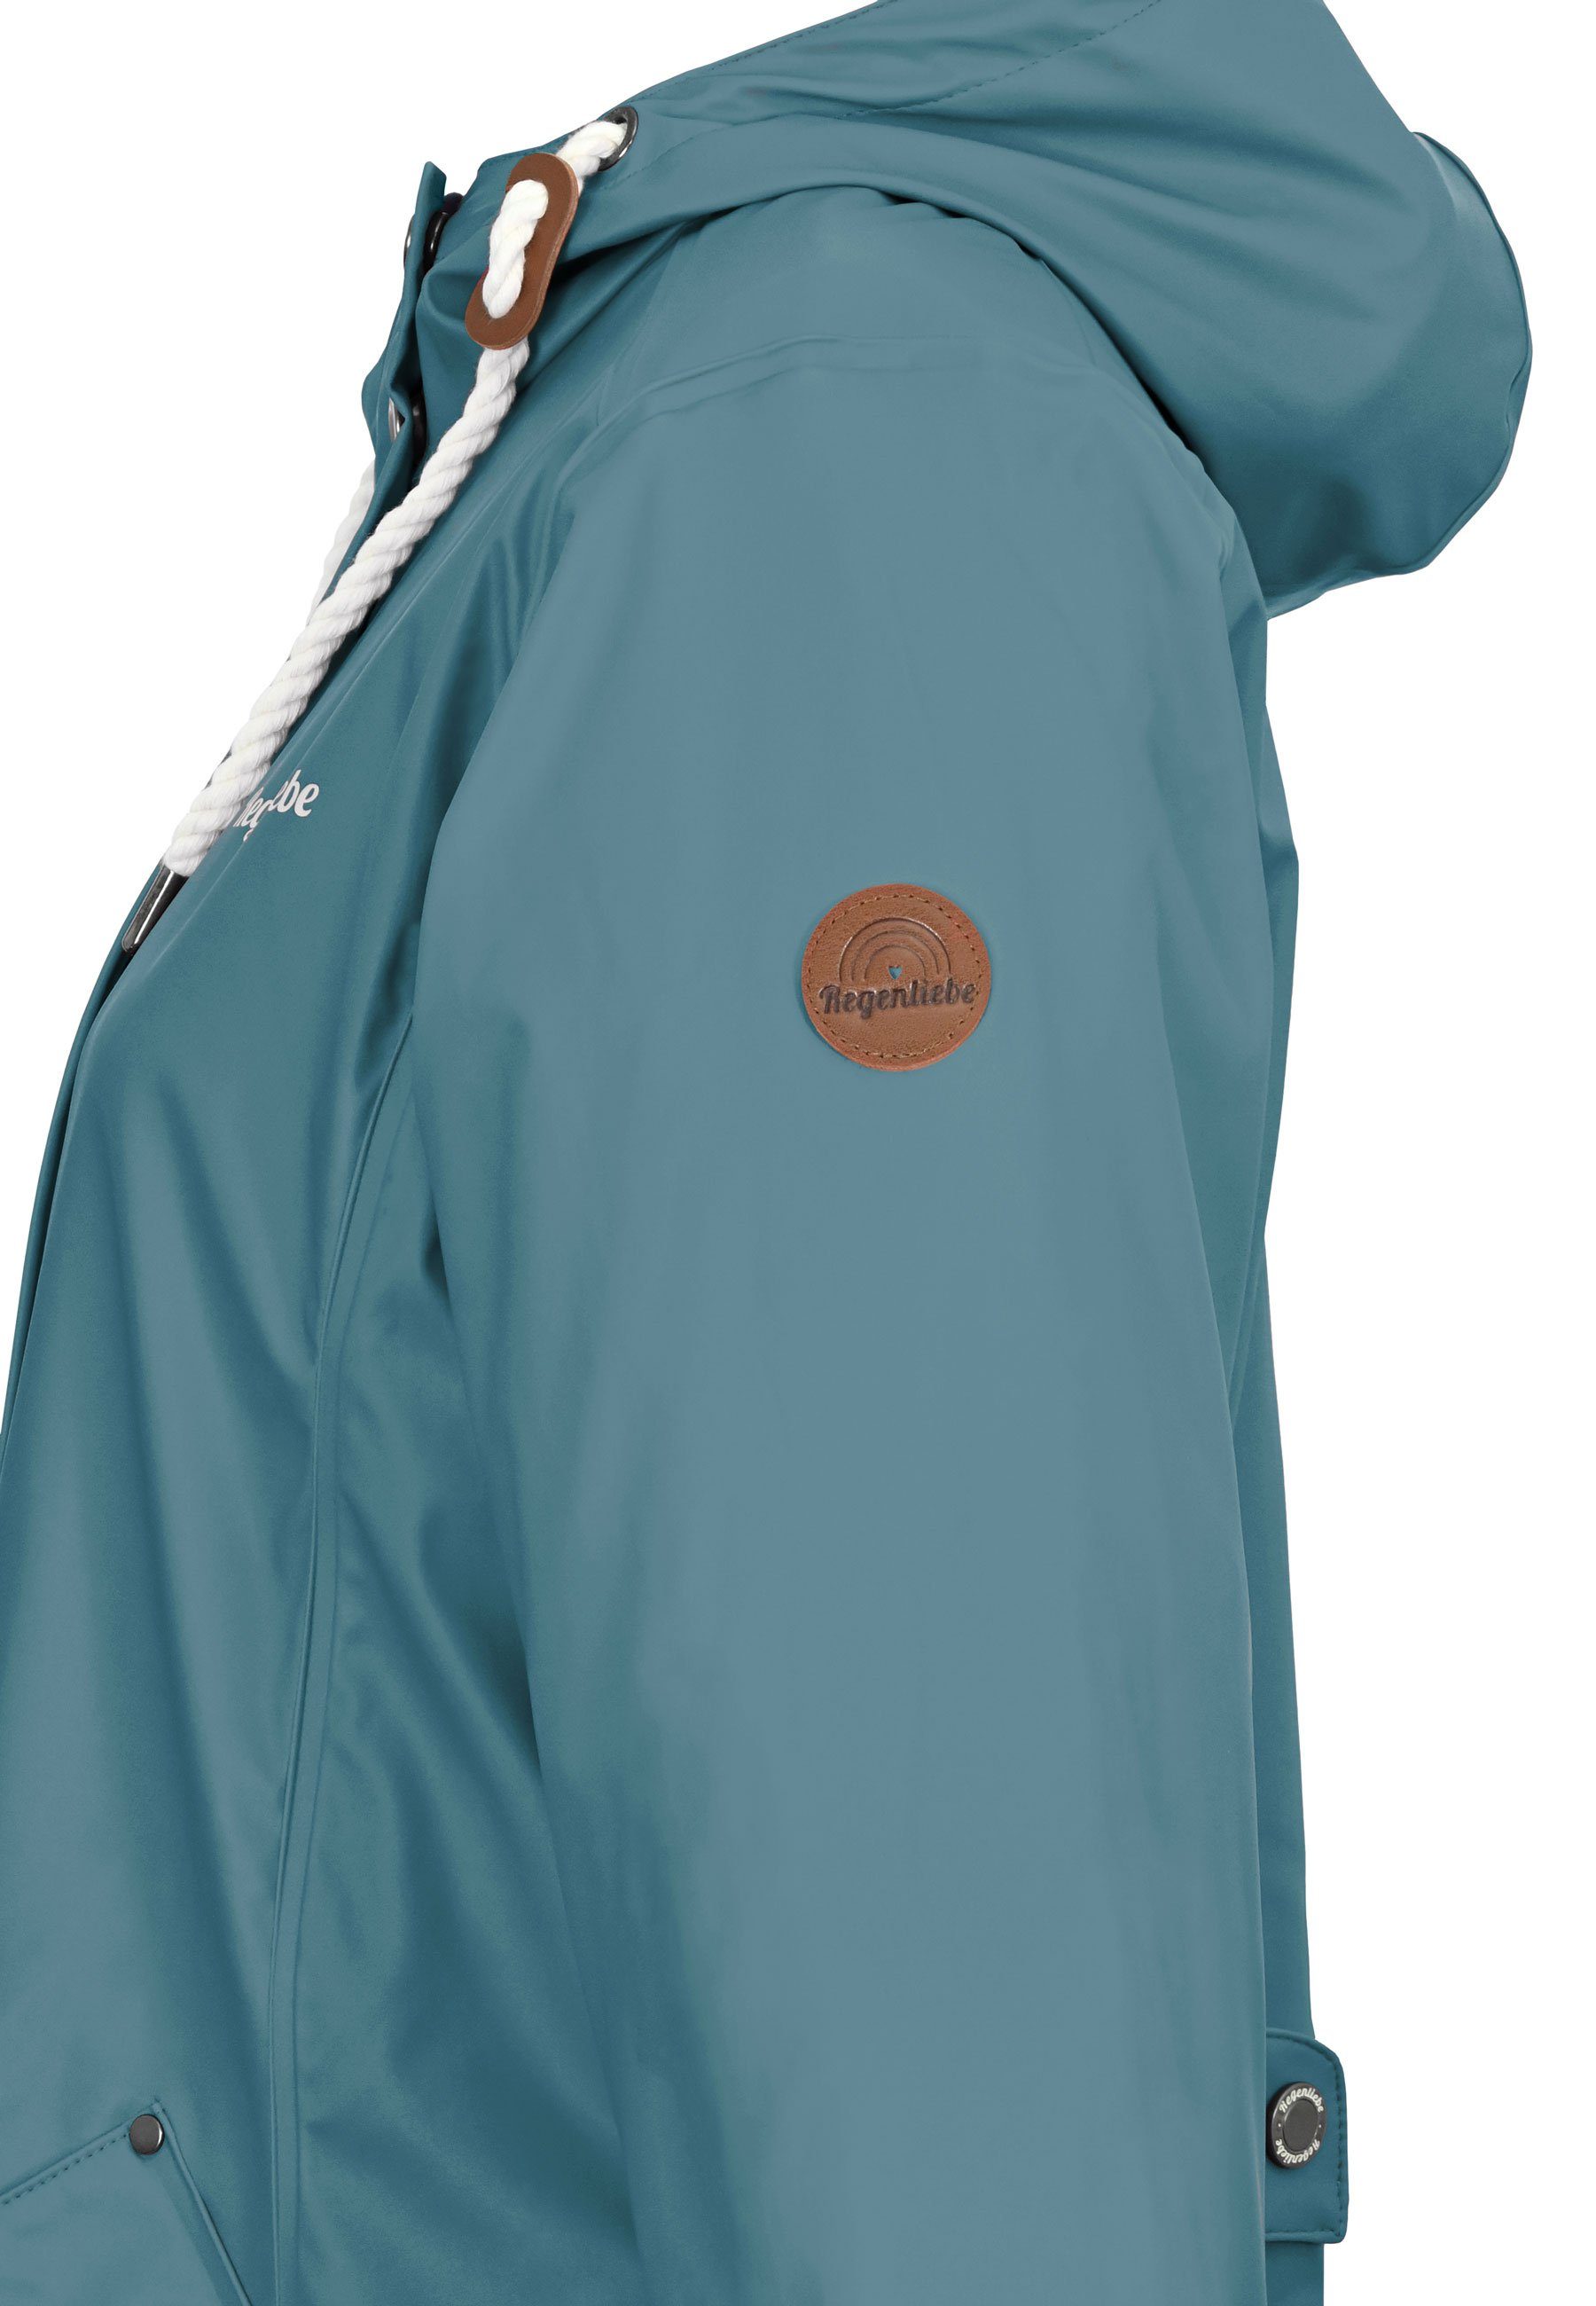 Friesennerz taillierter mit Regenjacke verstellbaren Regenmantel Kapuze Regenliebe petrolblau